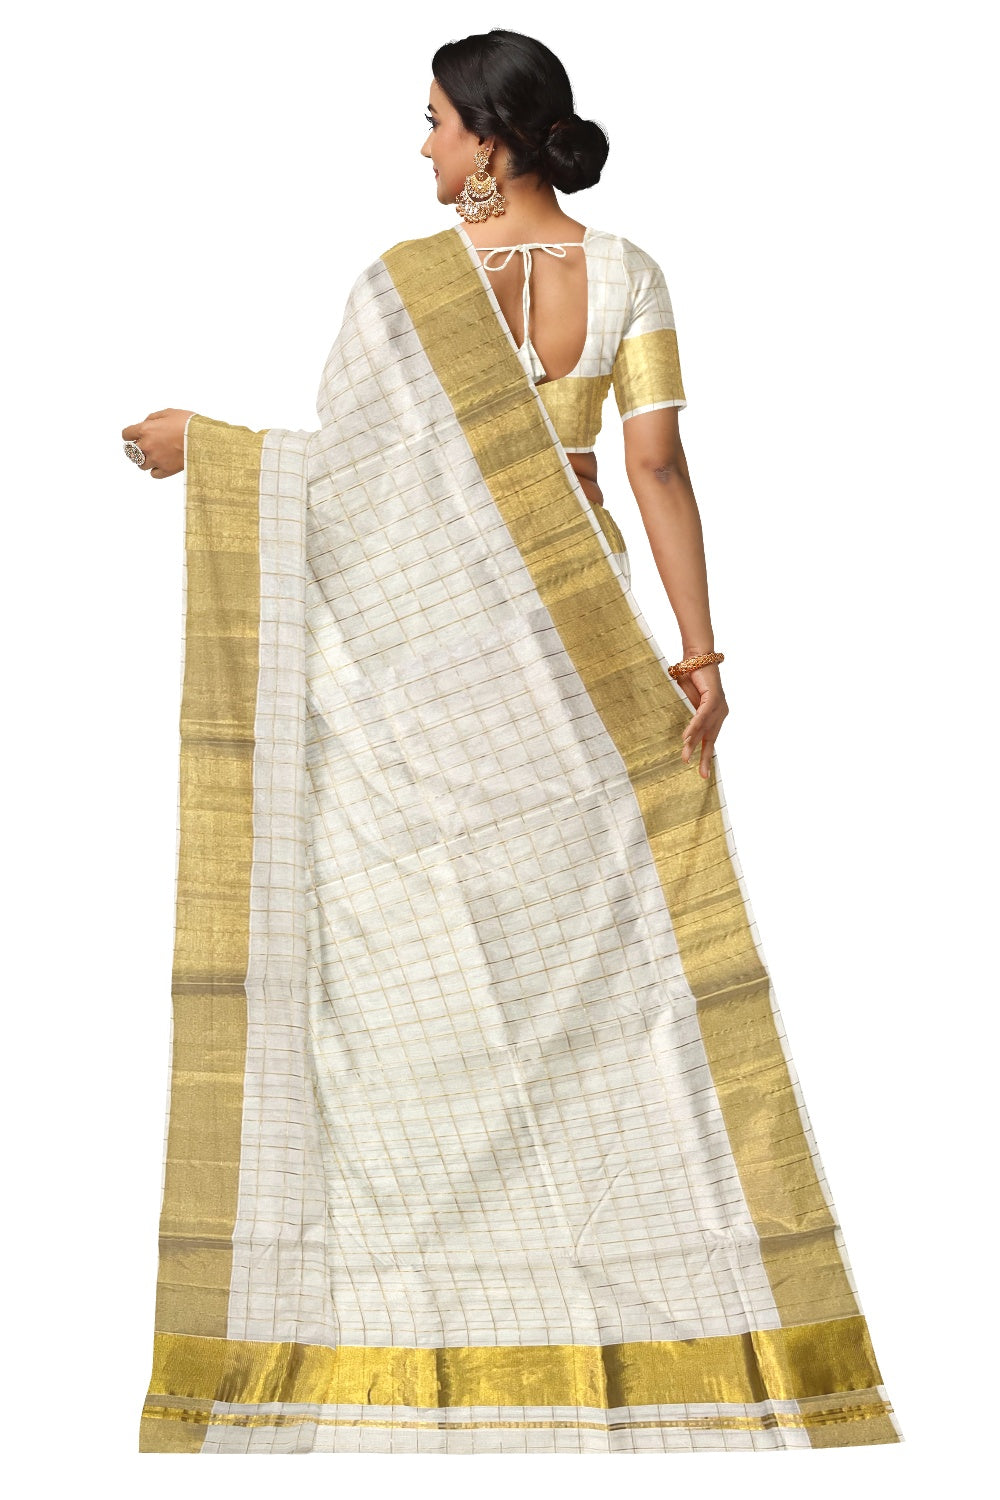 Southloom Premium Handloom Kerala Saree with Kasavu Big Check Design across Body